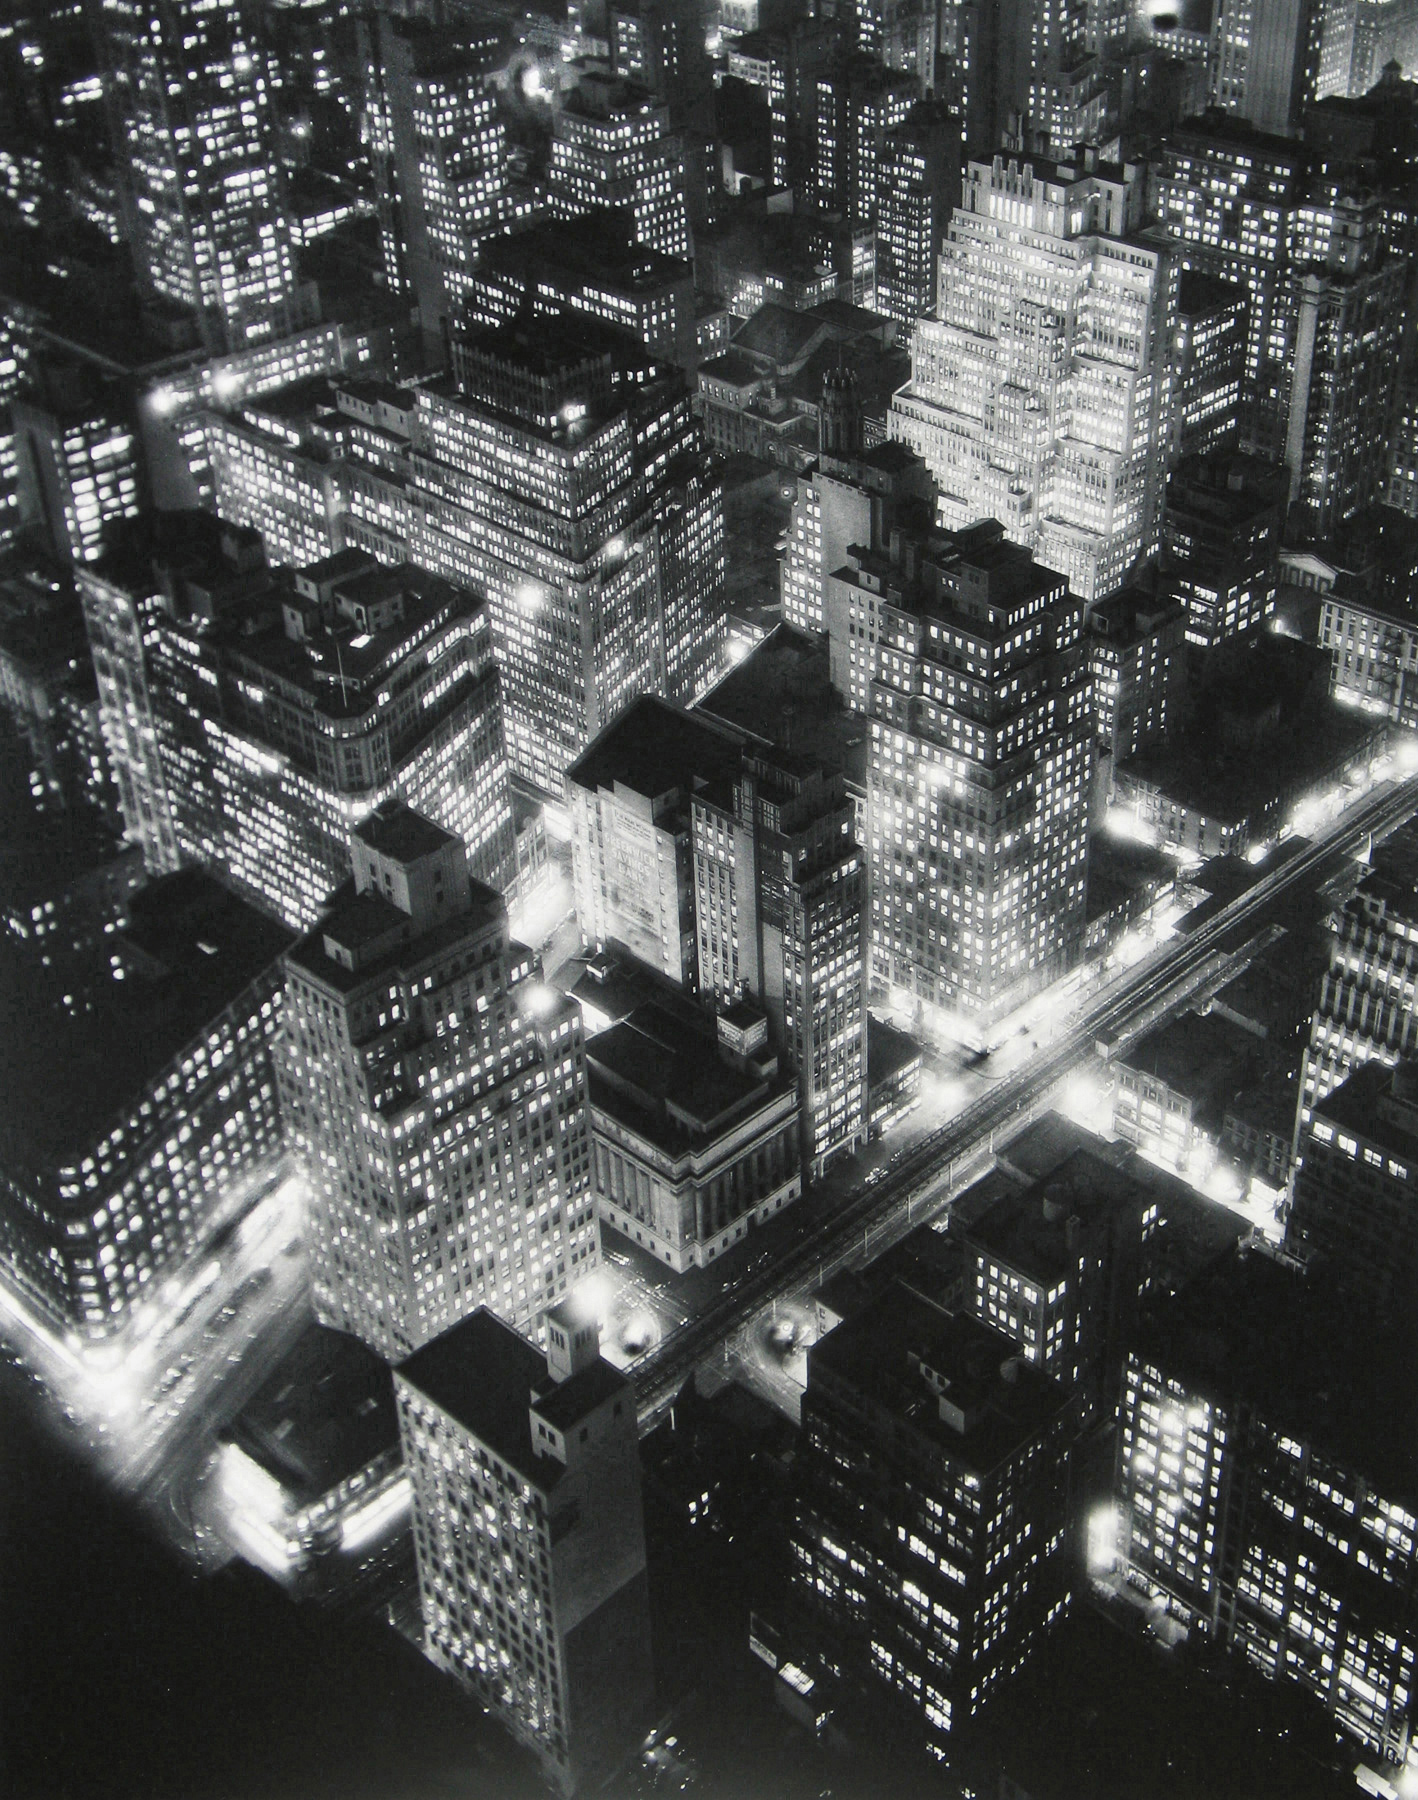 Berenice Abbott  Night View, New York, 1932  Gelatin silver print; printed later   35 7/8 x 28 3/8 inches